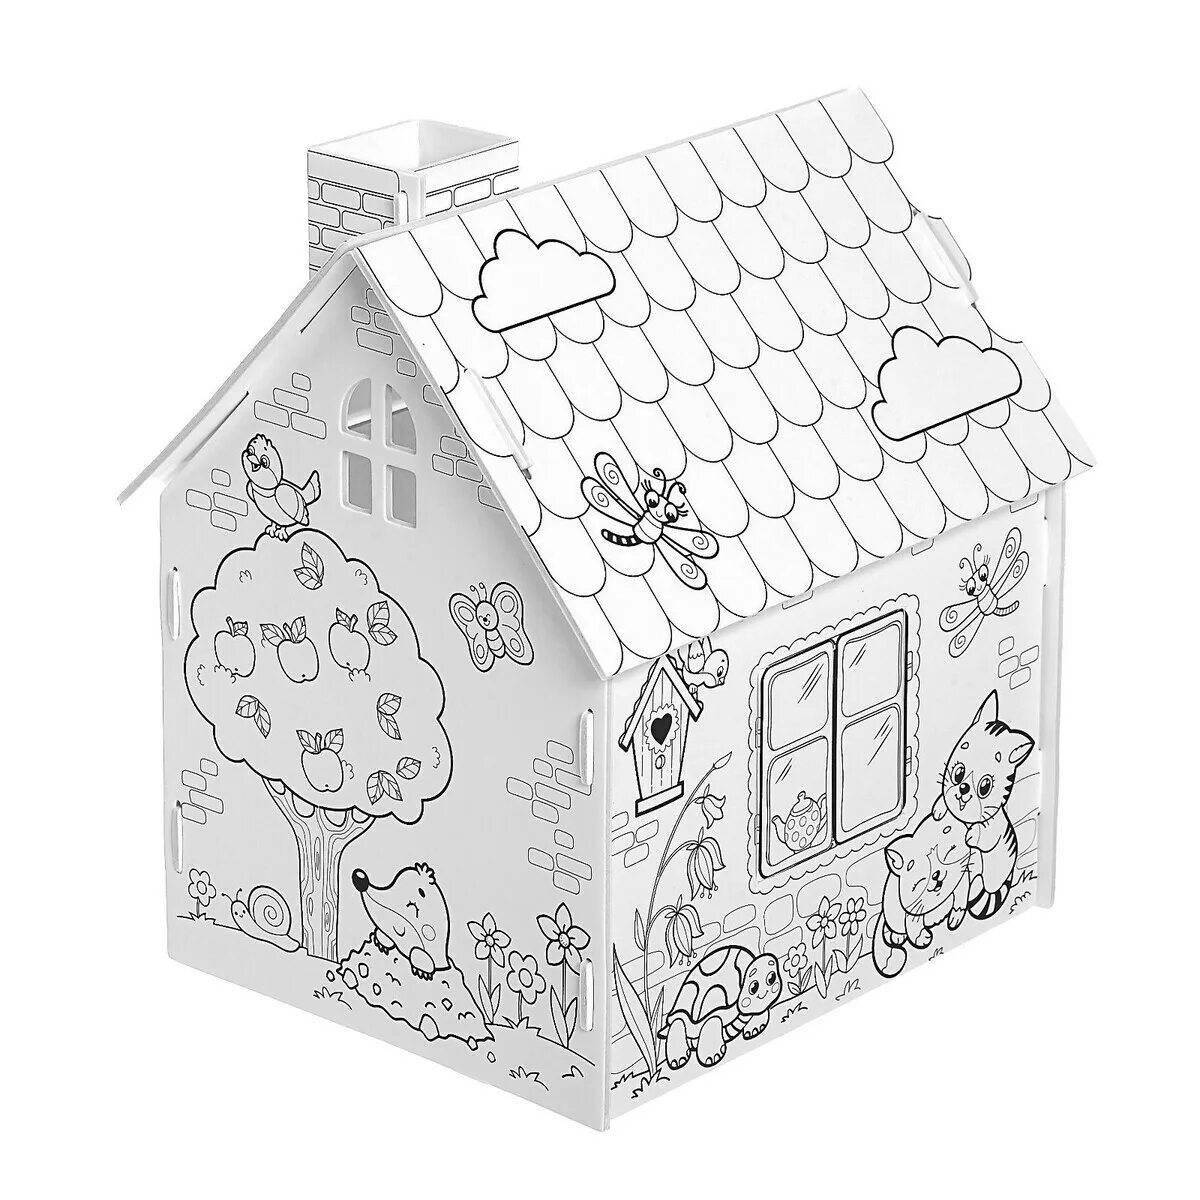 Cardboard house for kids #6